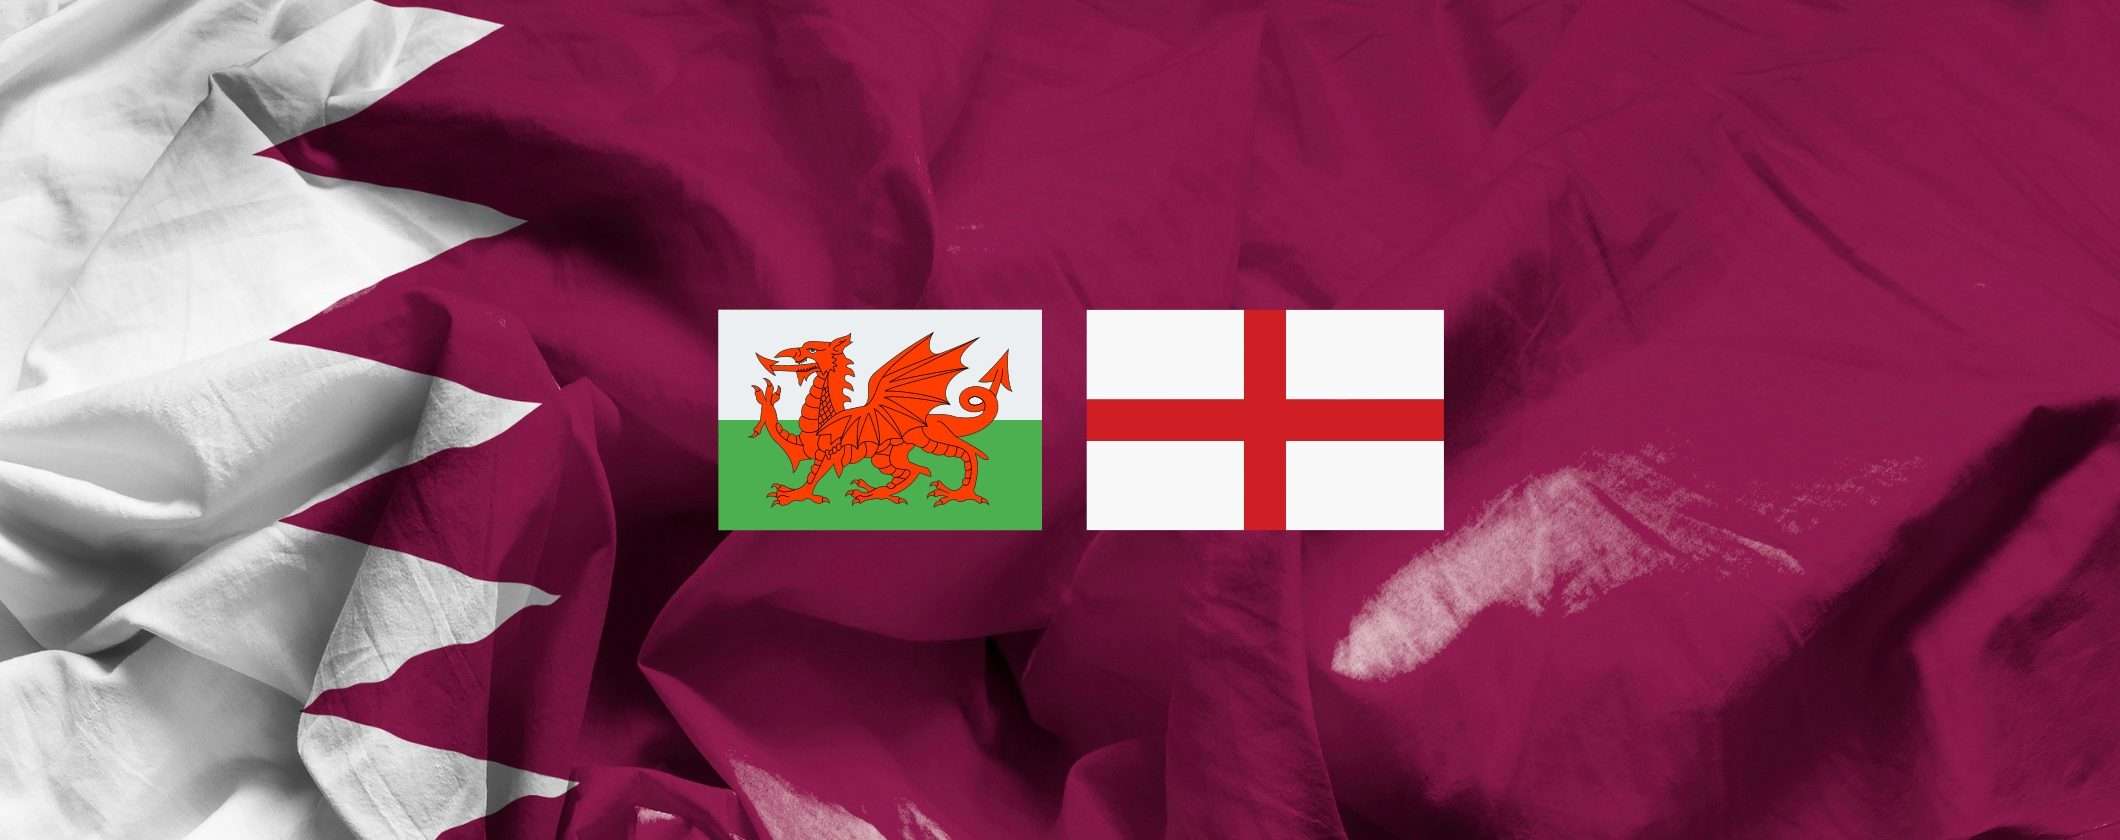 Guarda Galles-Inghilterra in streaming senza restrizioni